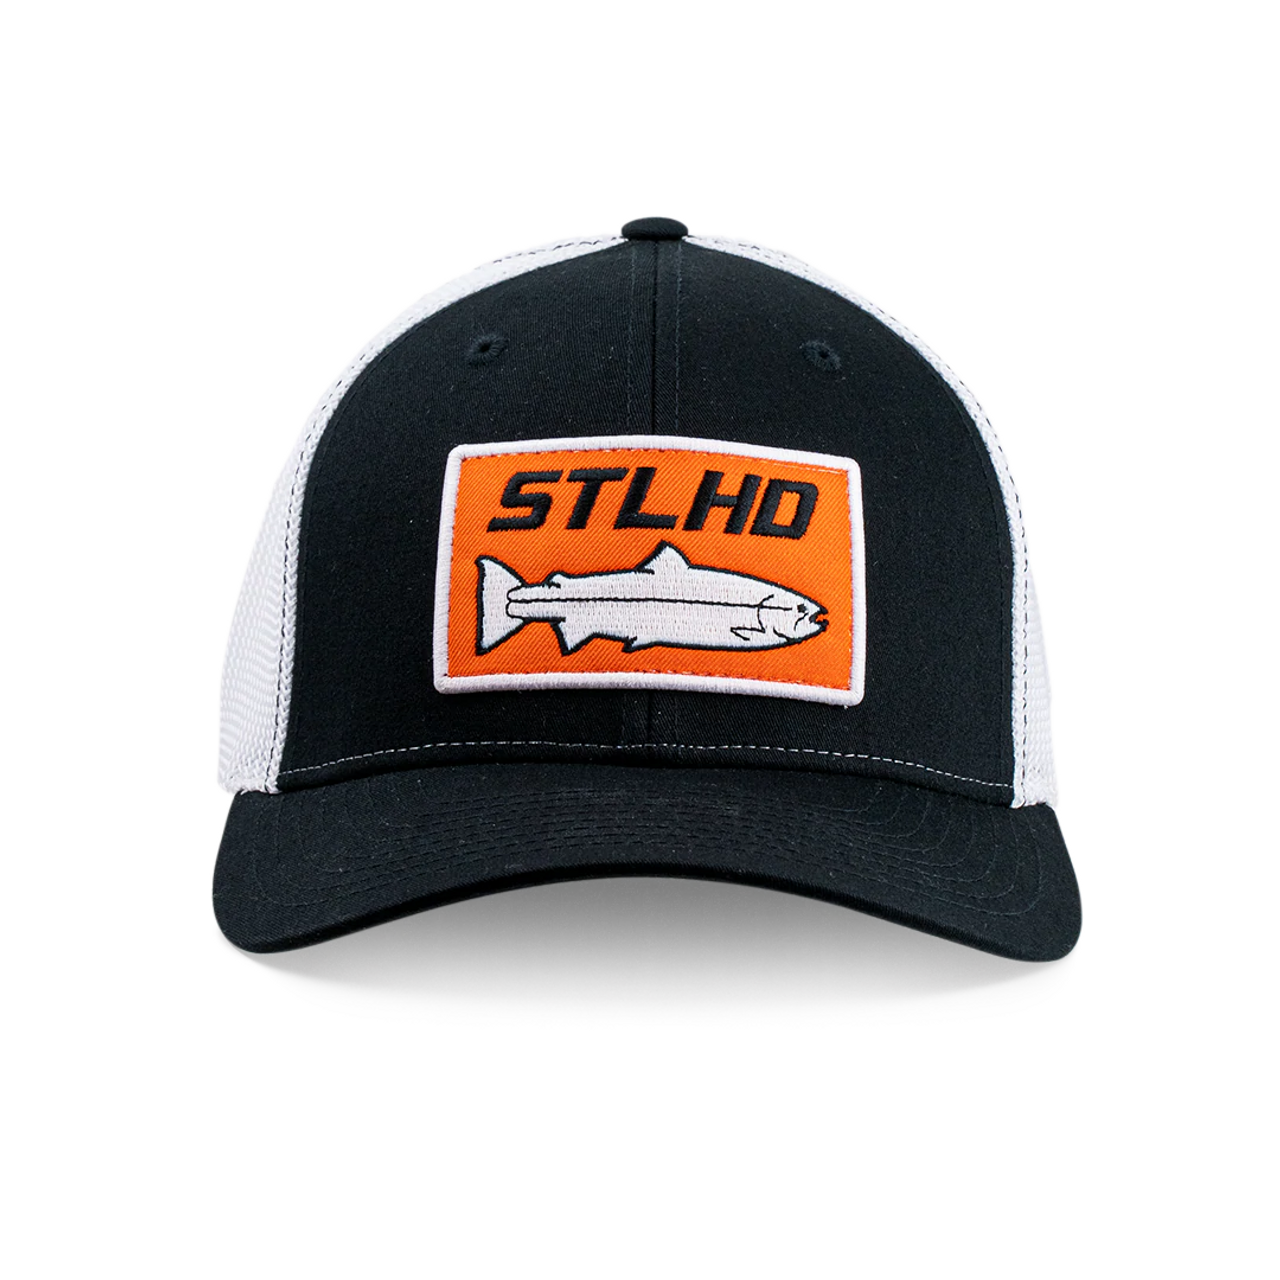 STLHD STANDARD BLACK/WHITE FLEXFIT HAT